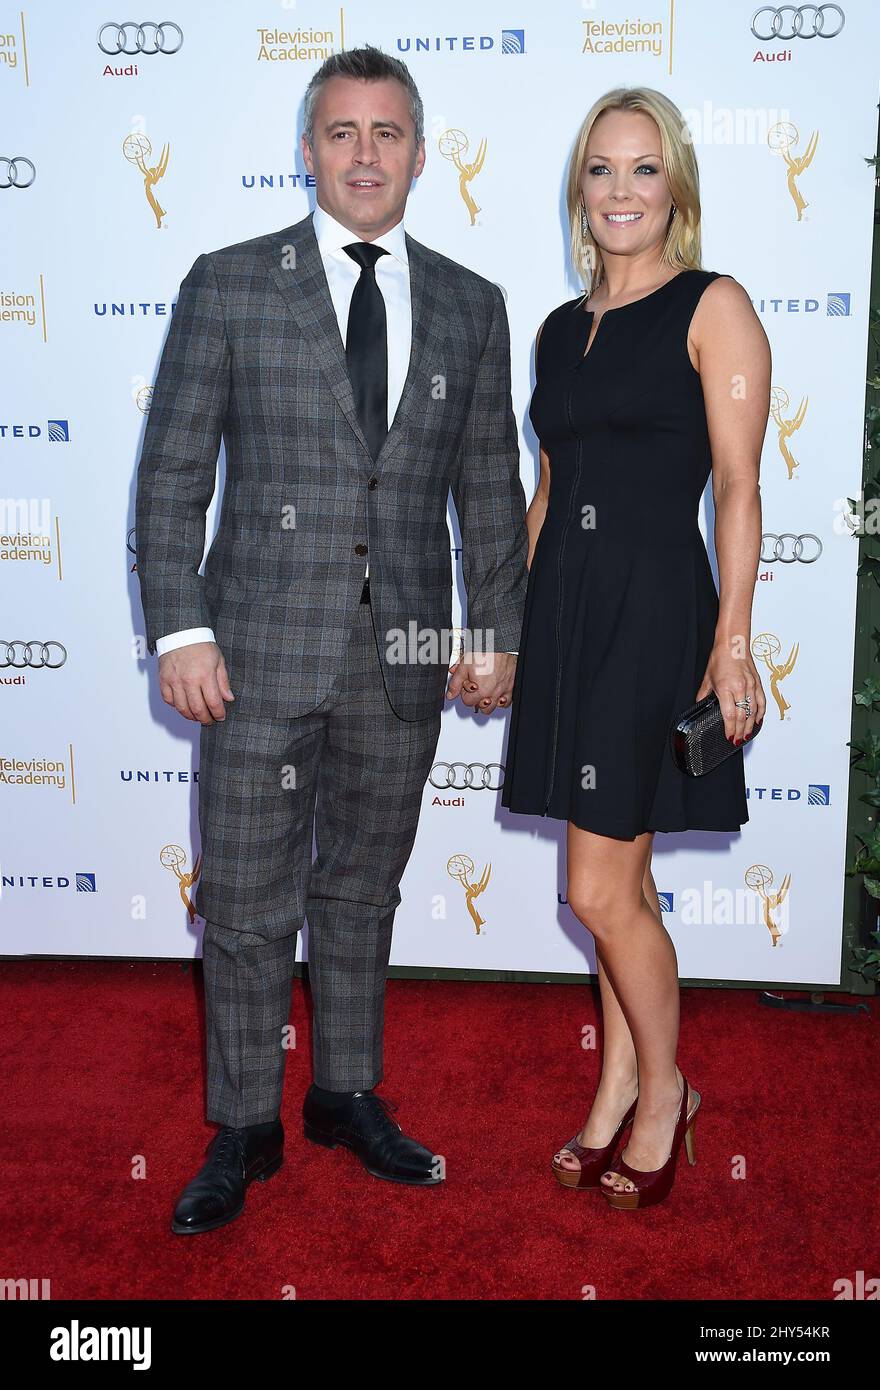 Matt LeBlanc attending the 66th Emmy Awards Performers Nominee Reception Stock Photo